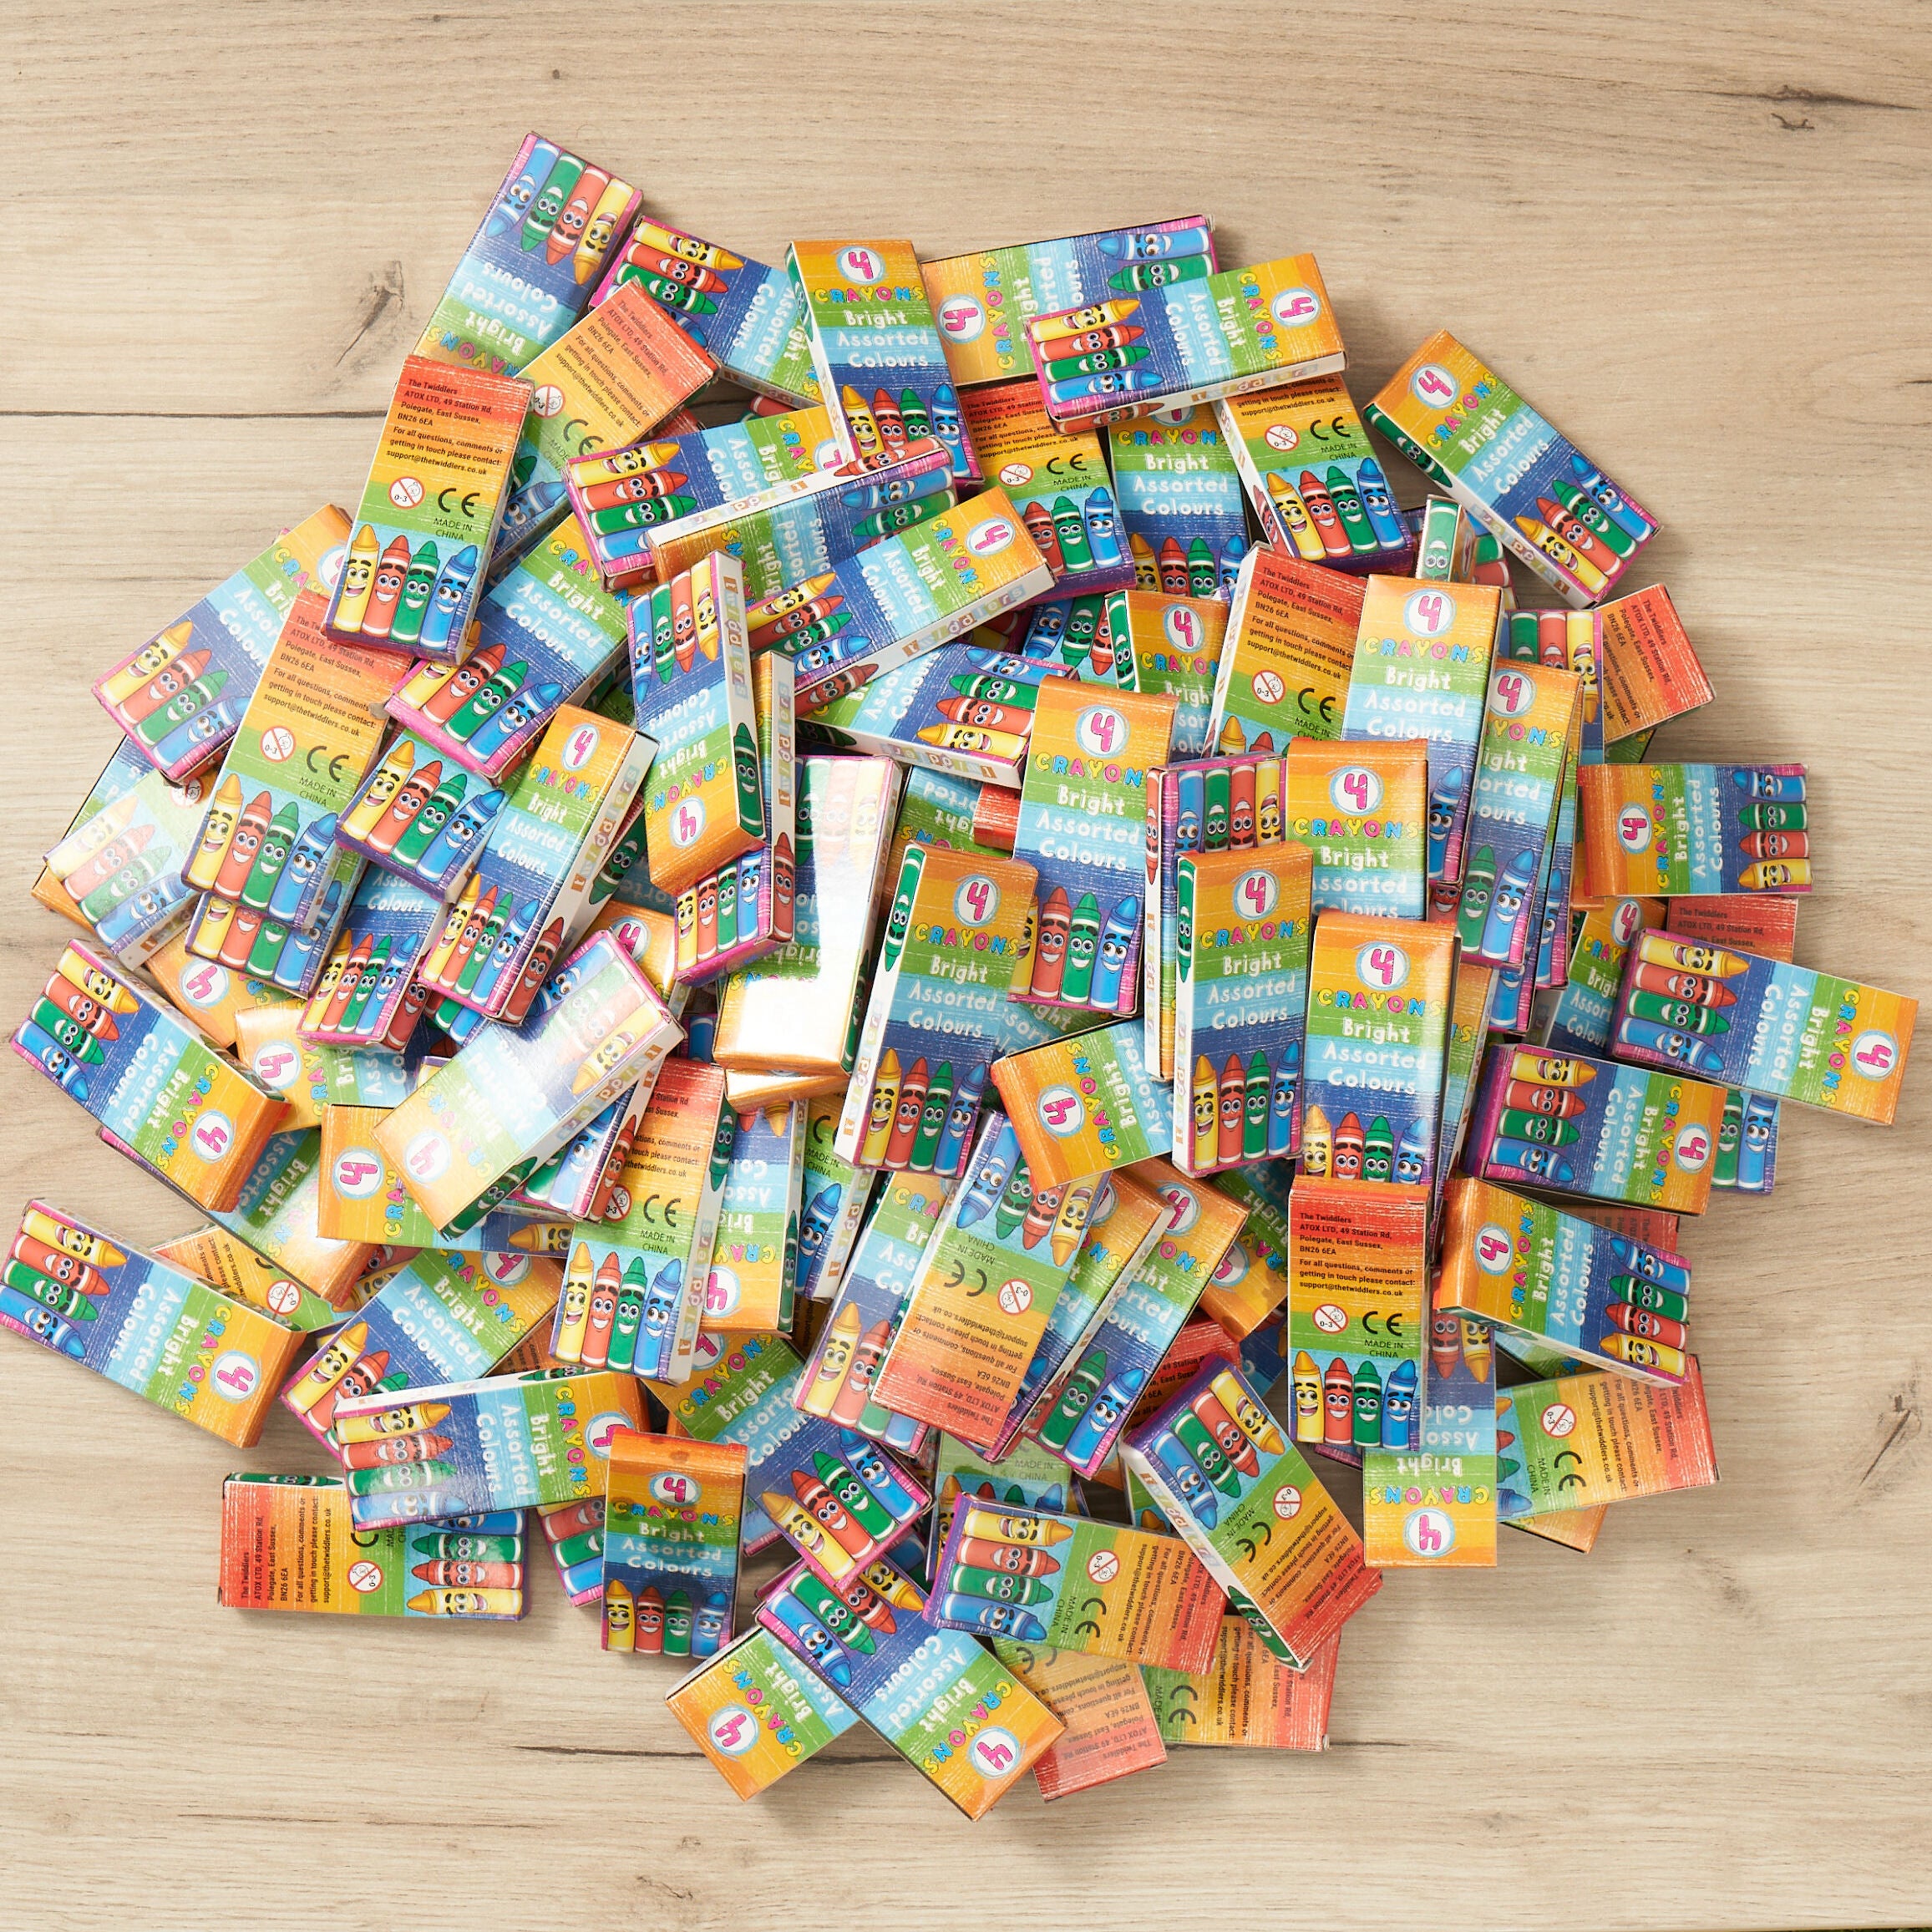 Bulk Crayons - 576 Crayons! Case Of 144 4-Packs, Premium Color